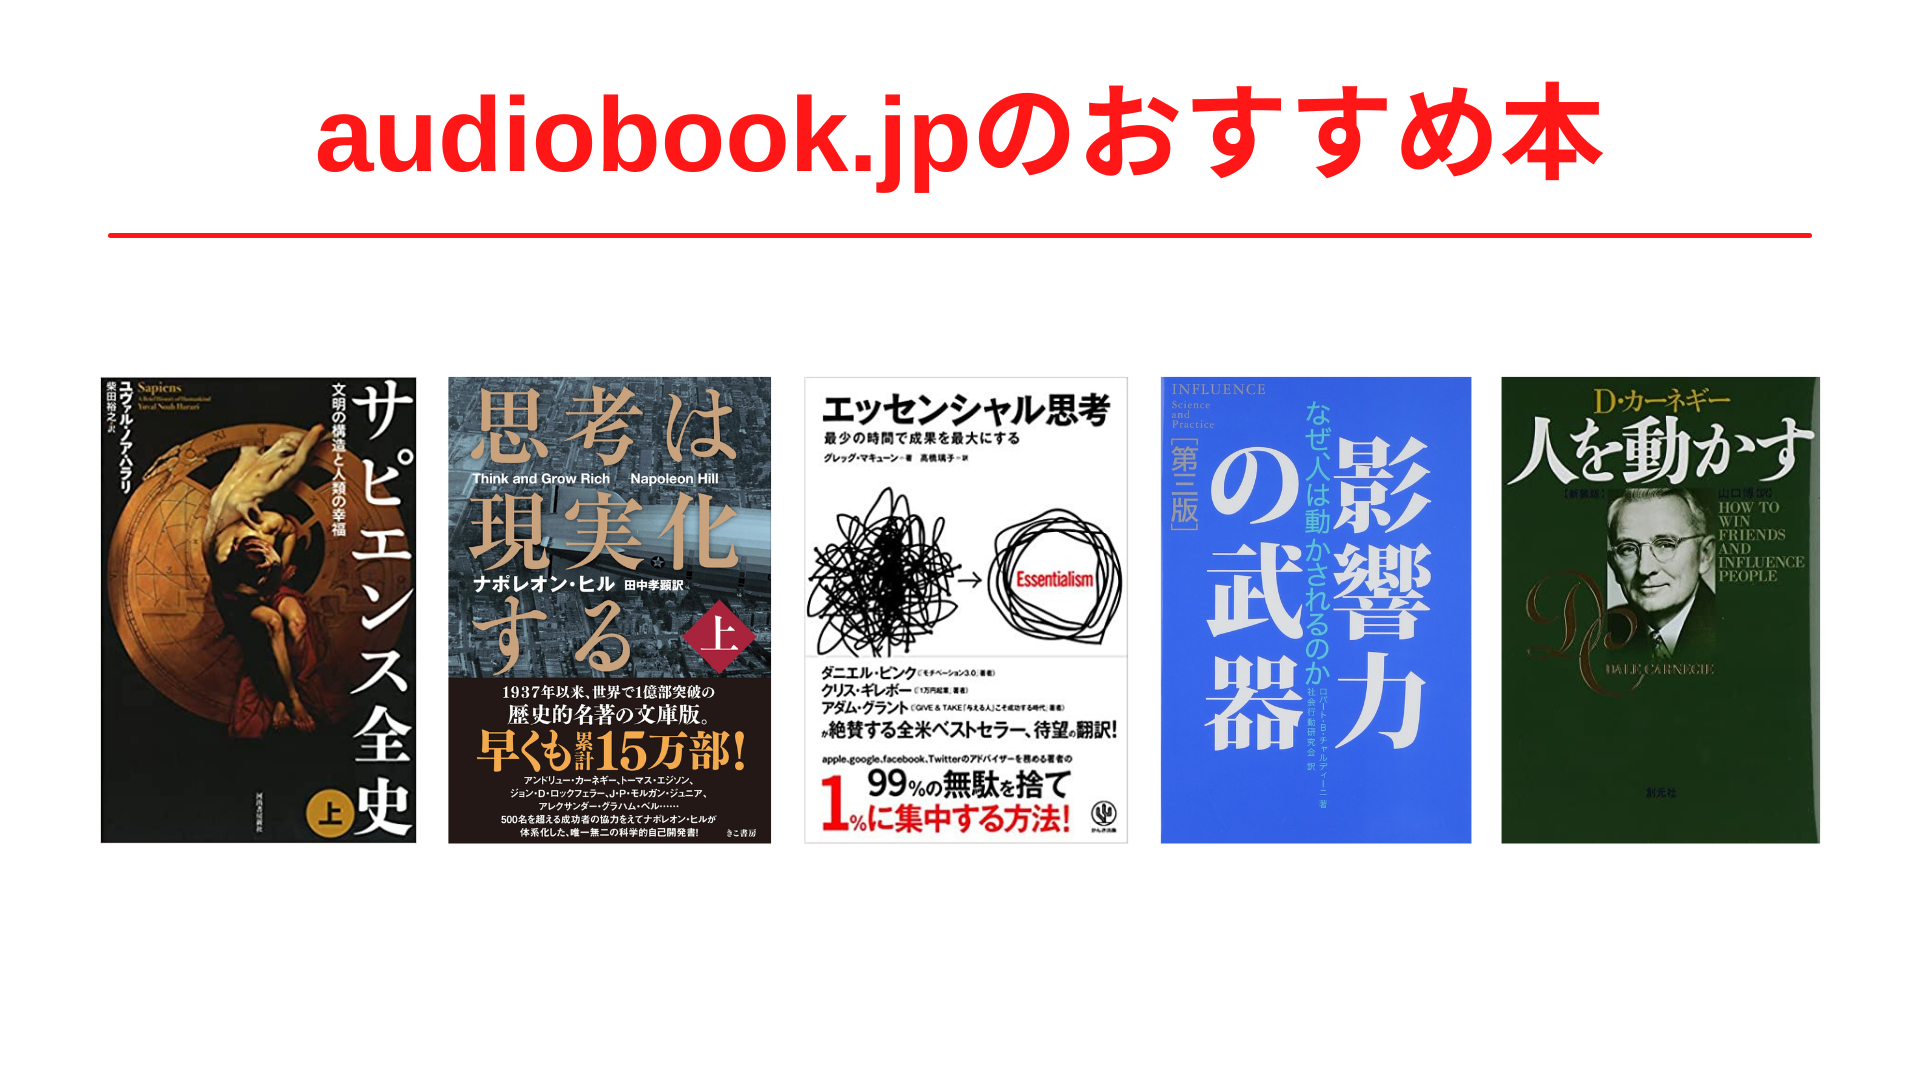 audiobook.jpの中でおすすめの本を聞いてみました